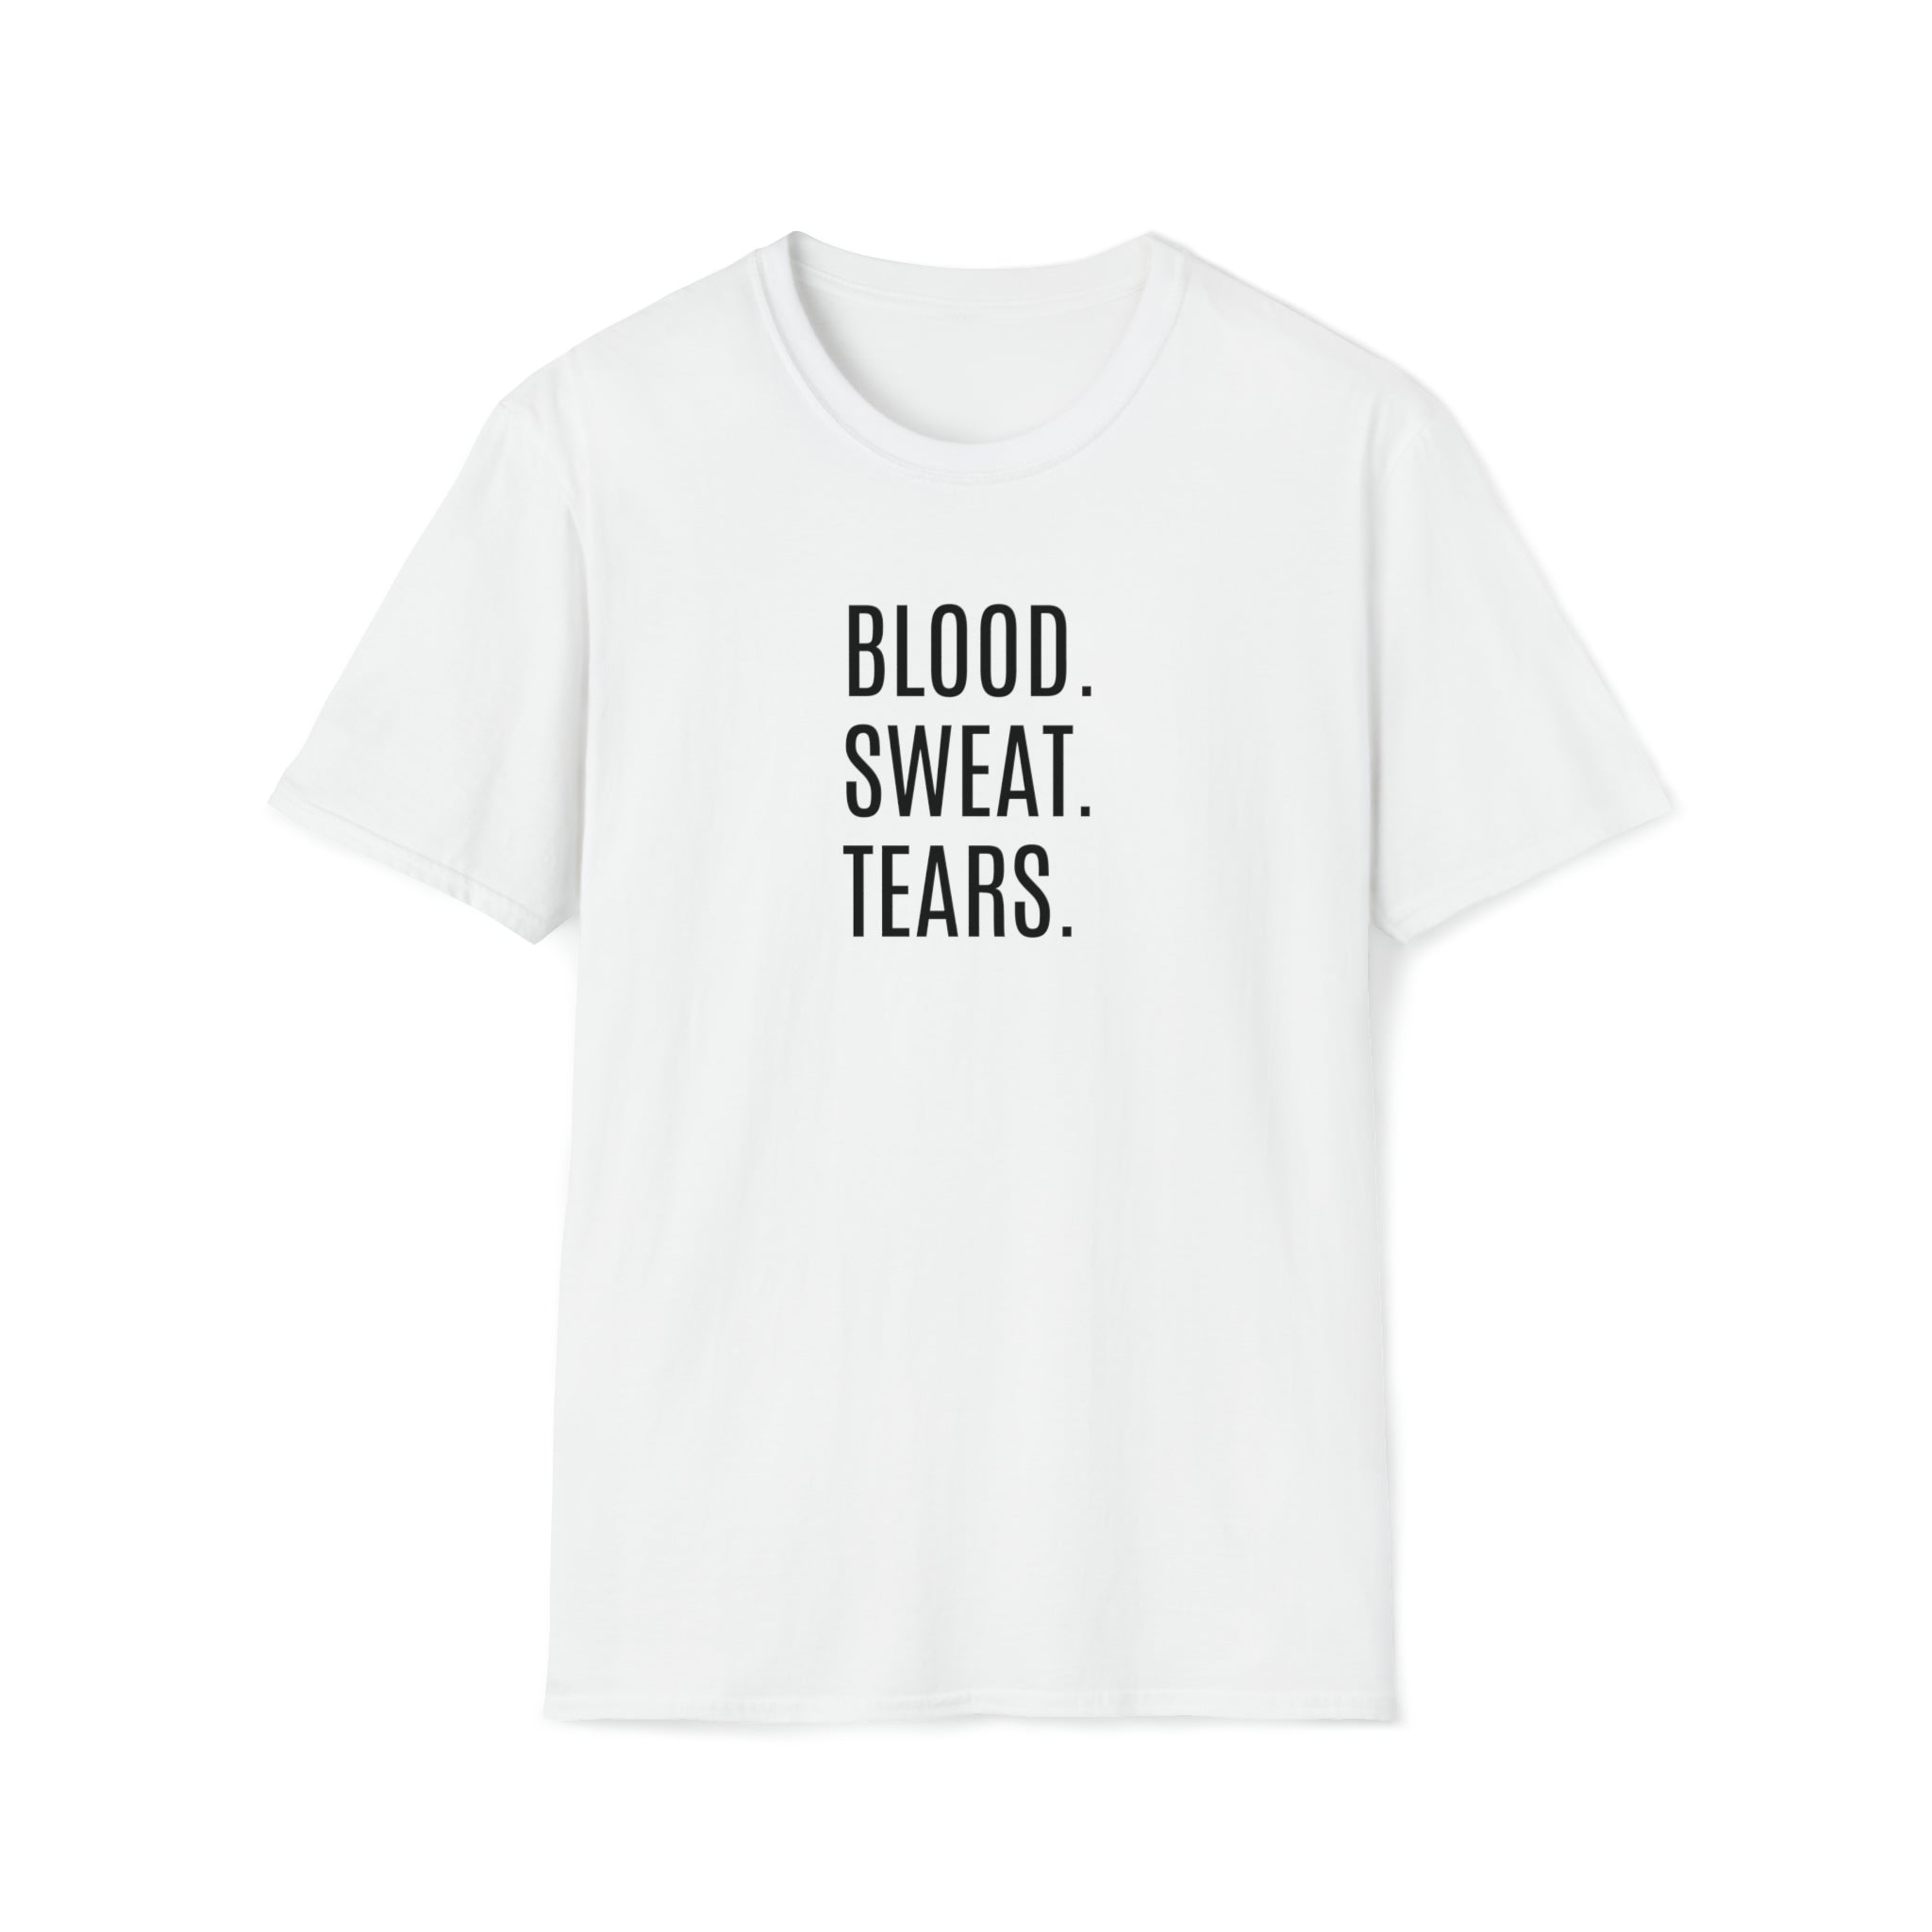 Blood. Sweat. Tears. T-Shirt